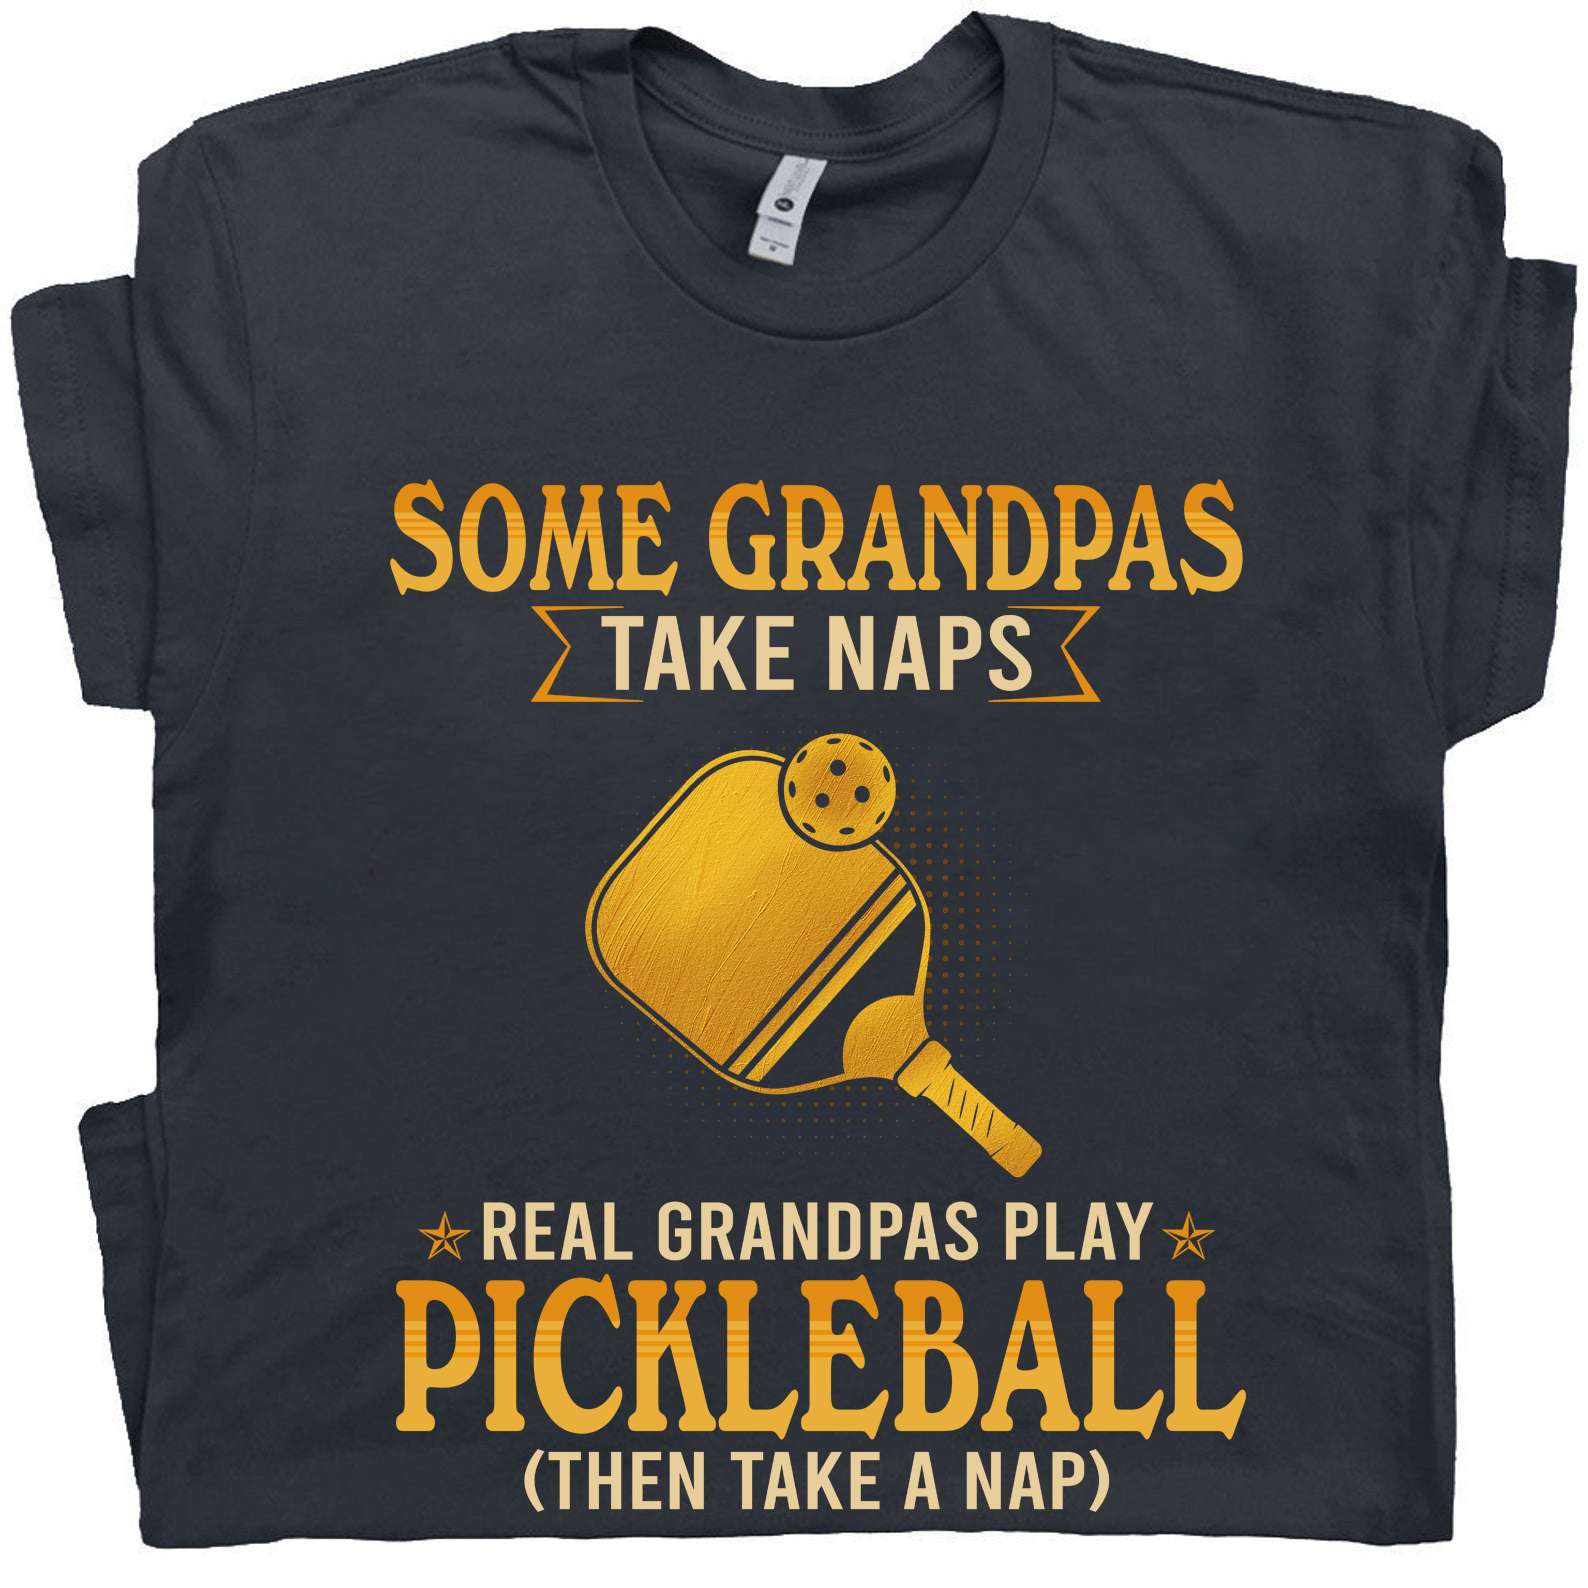 Pickleball Grandpas - Some grandpas take naps real grandpas play pickleball